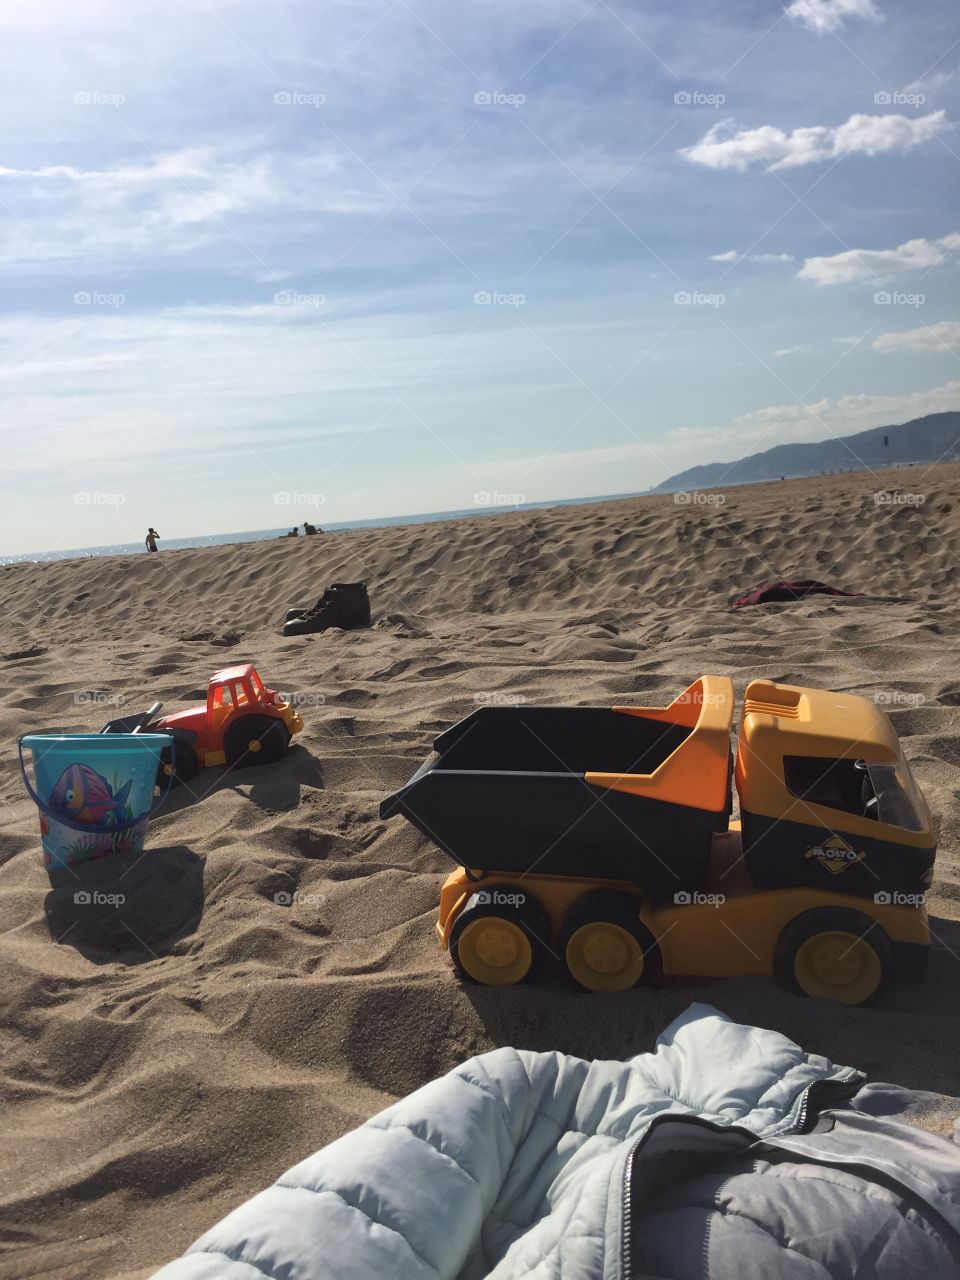 Toys at the beach